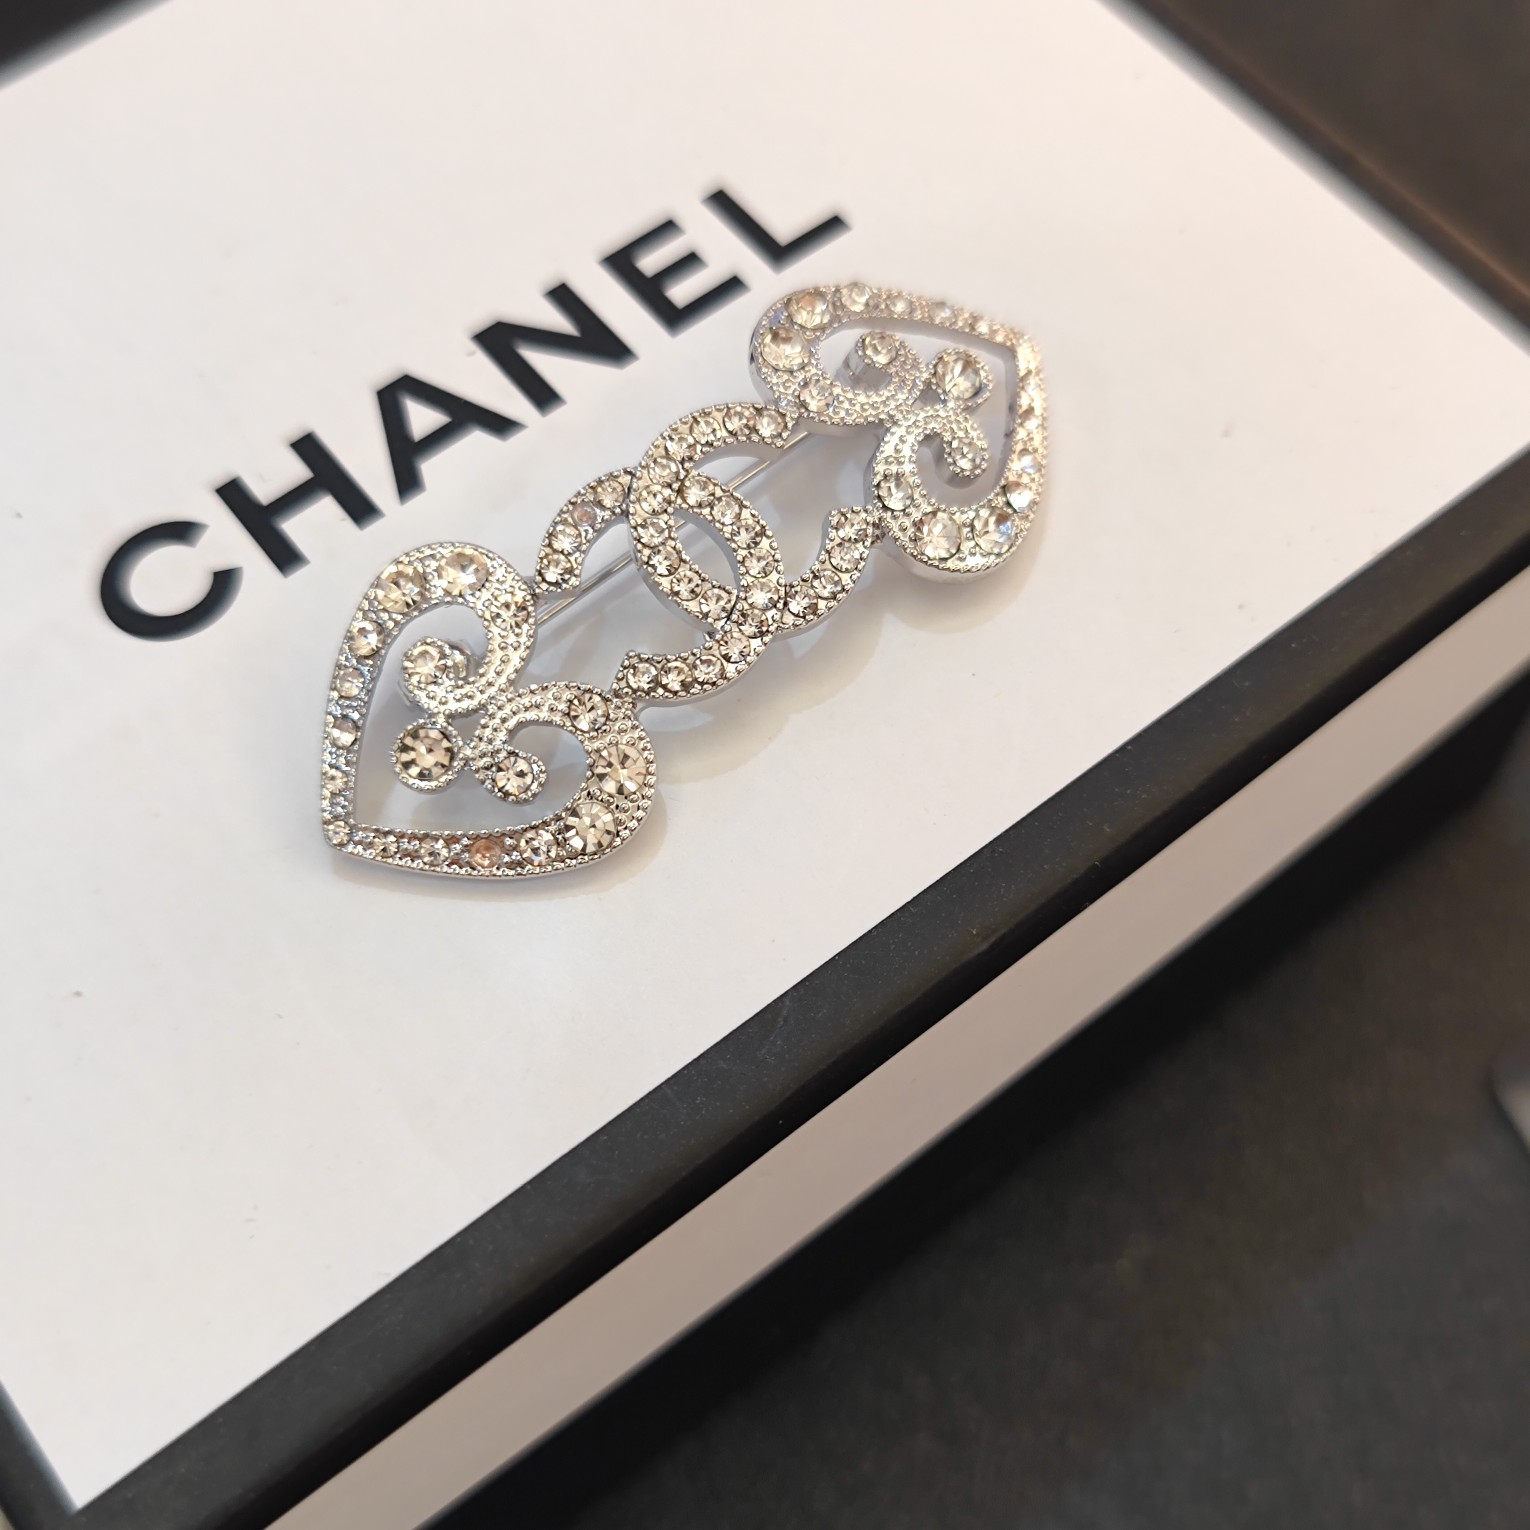 C012 Chanel brooch